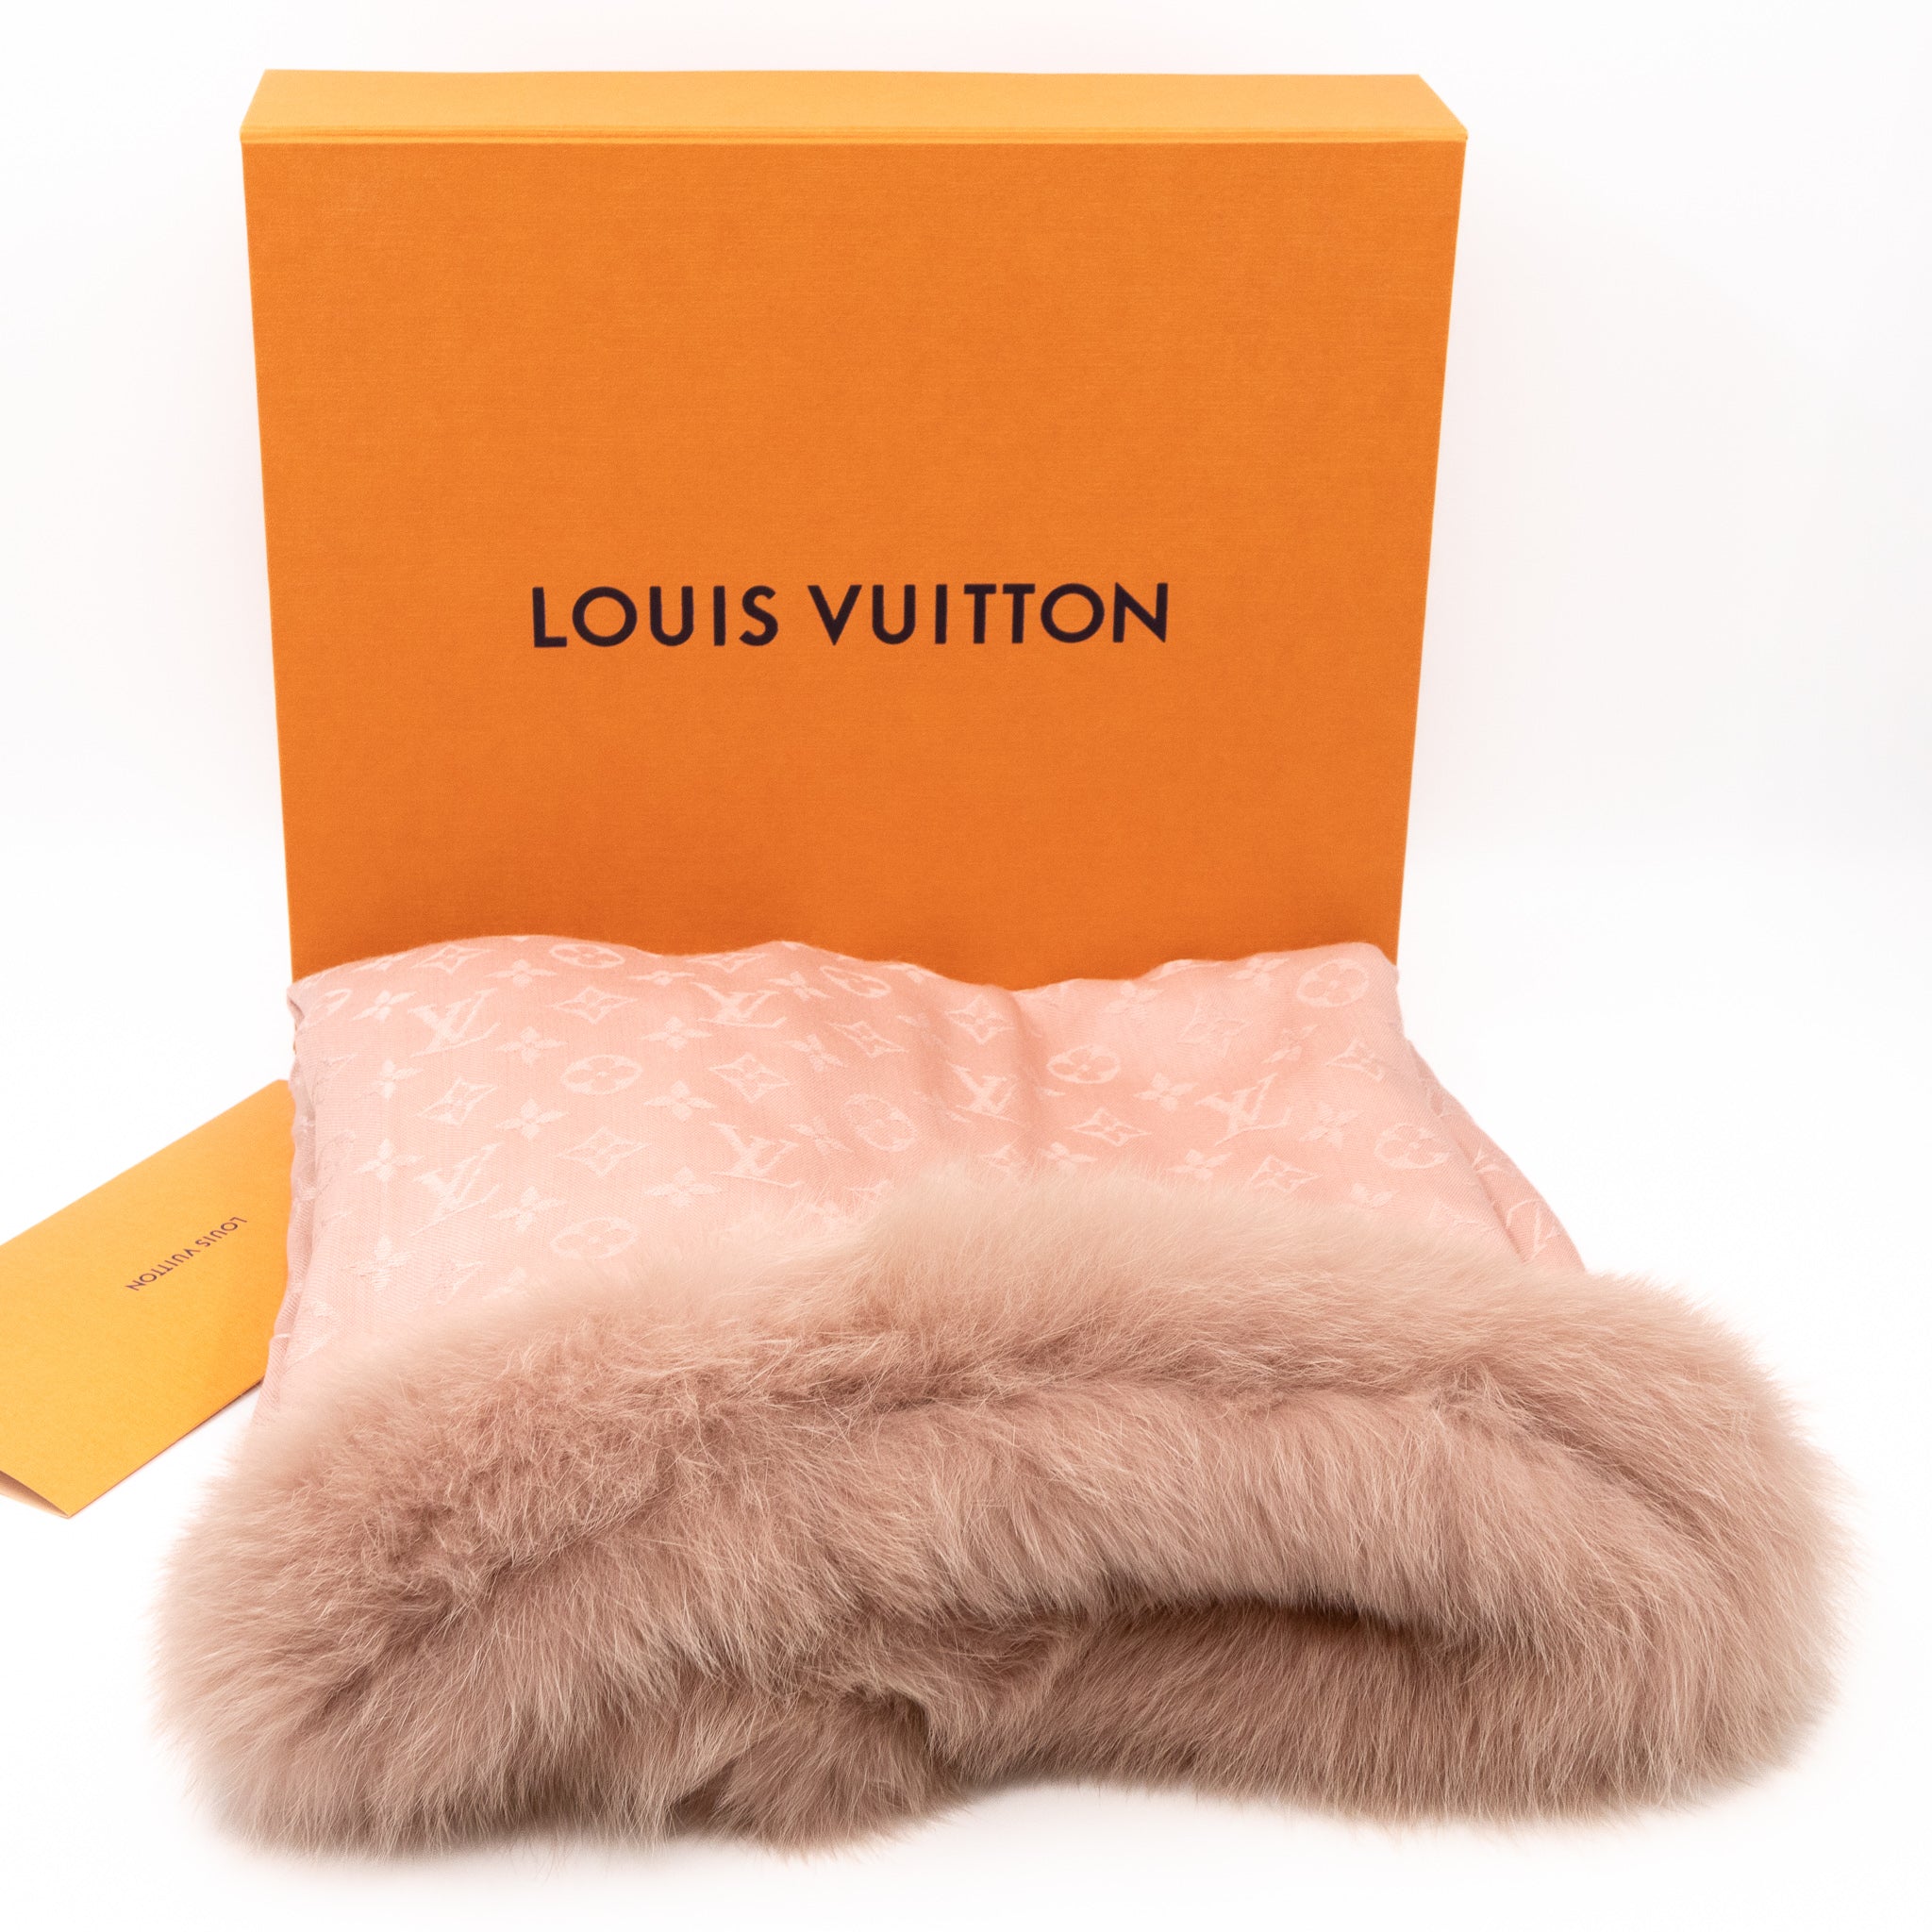 * Louis Vuitton LV- Esarfa, fular, sal (Shawl), NUDE MARO, 190x72 cm